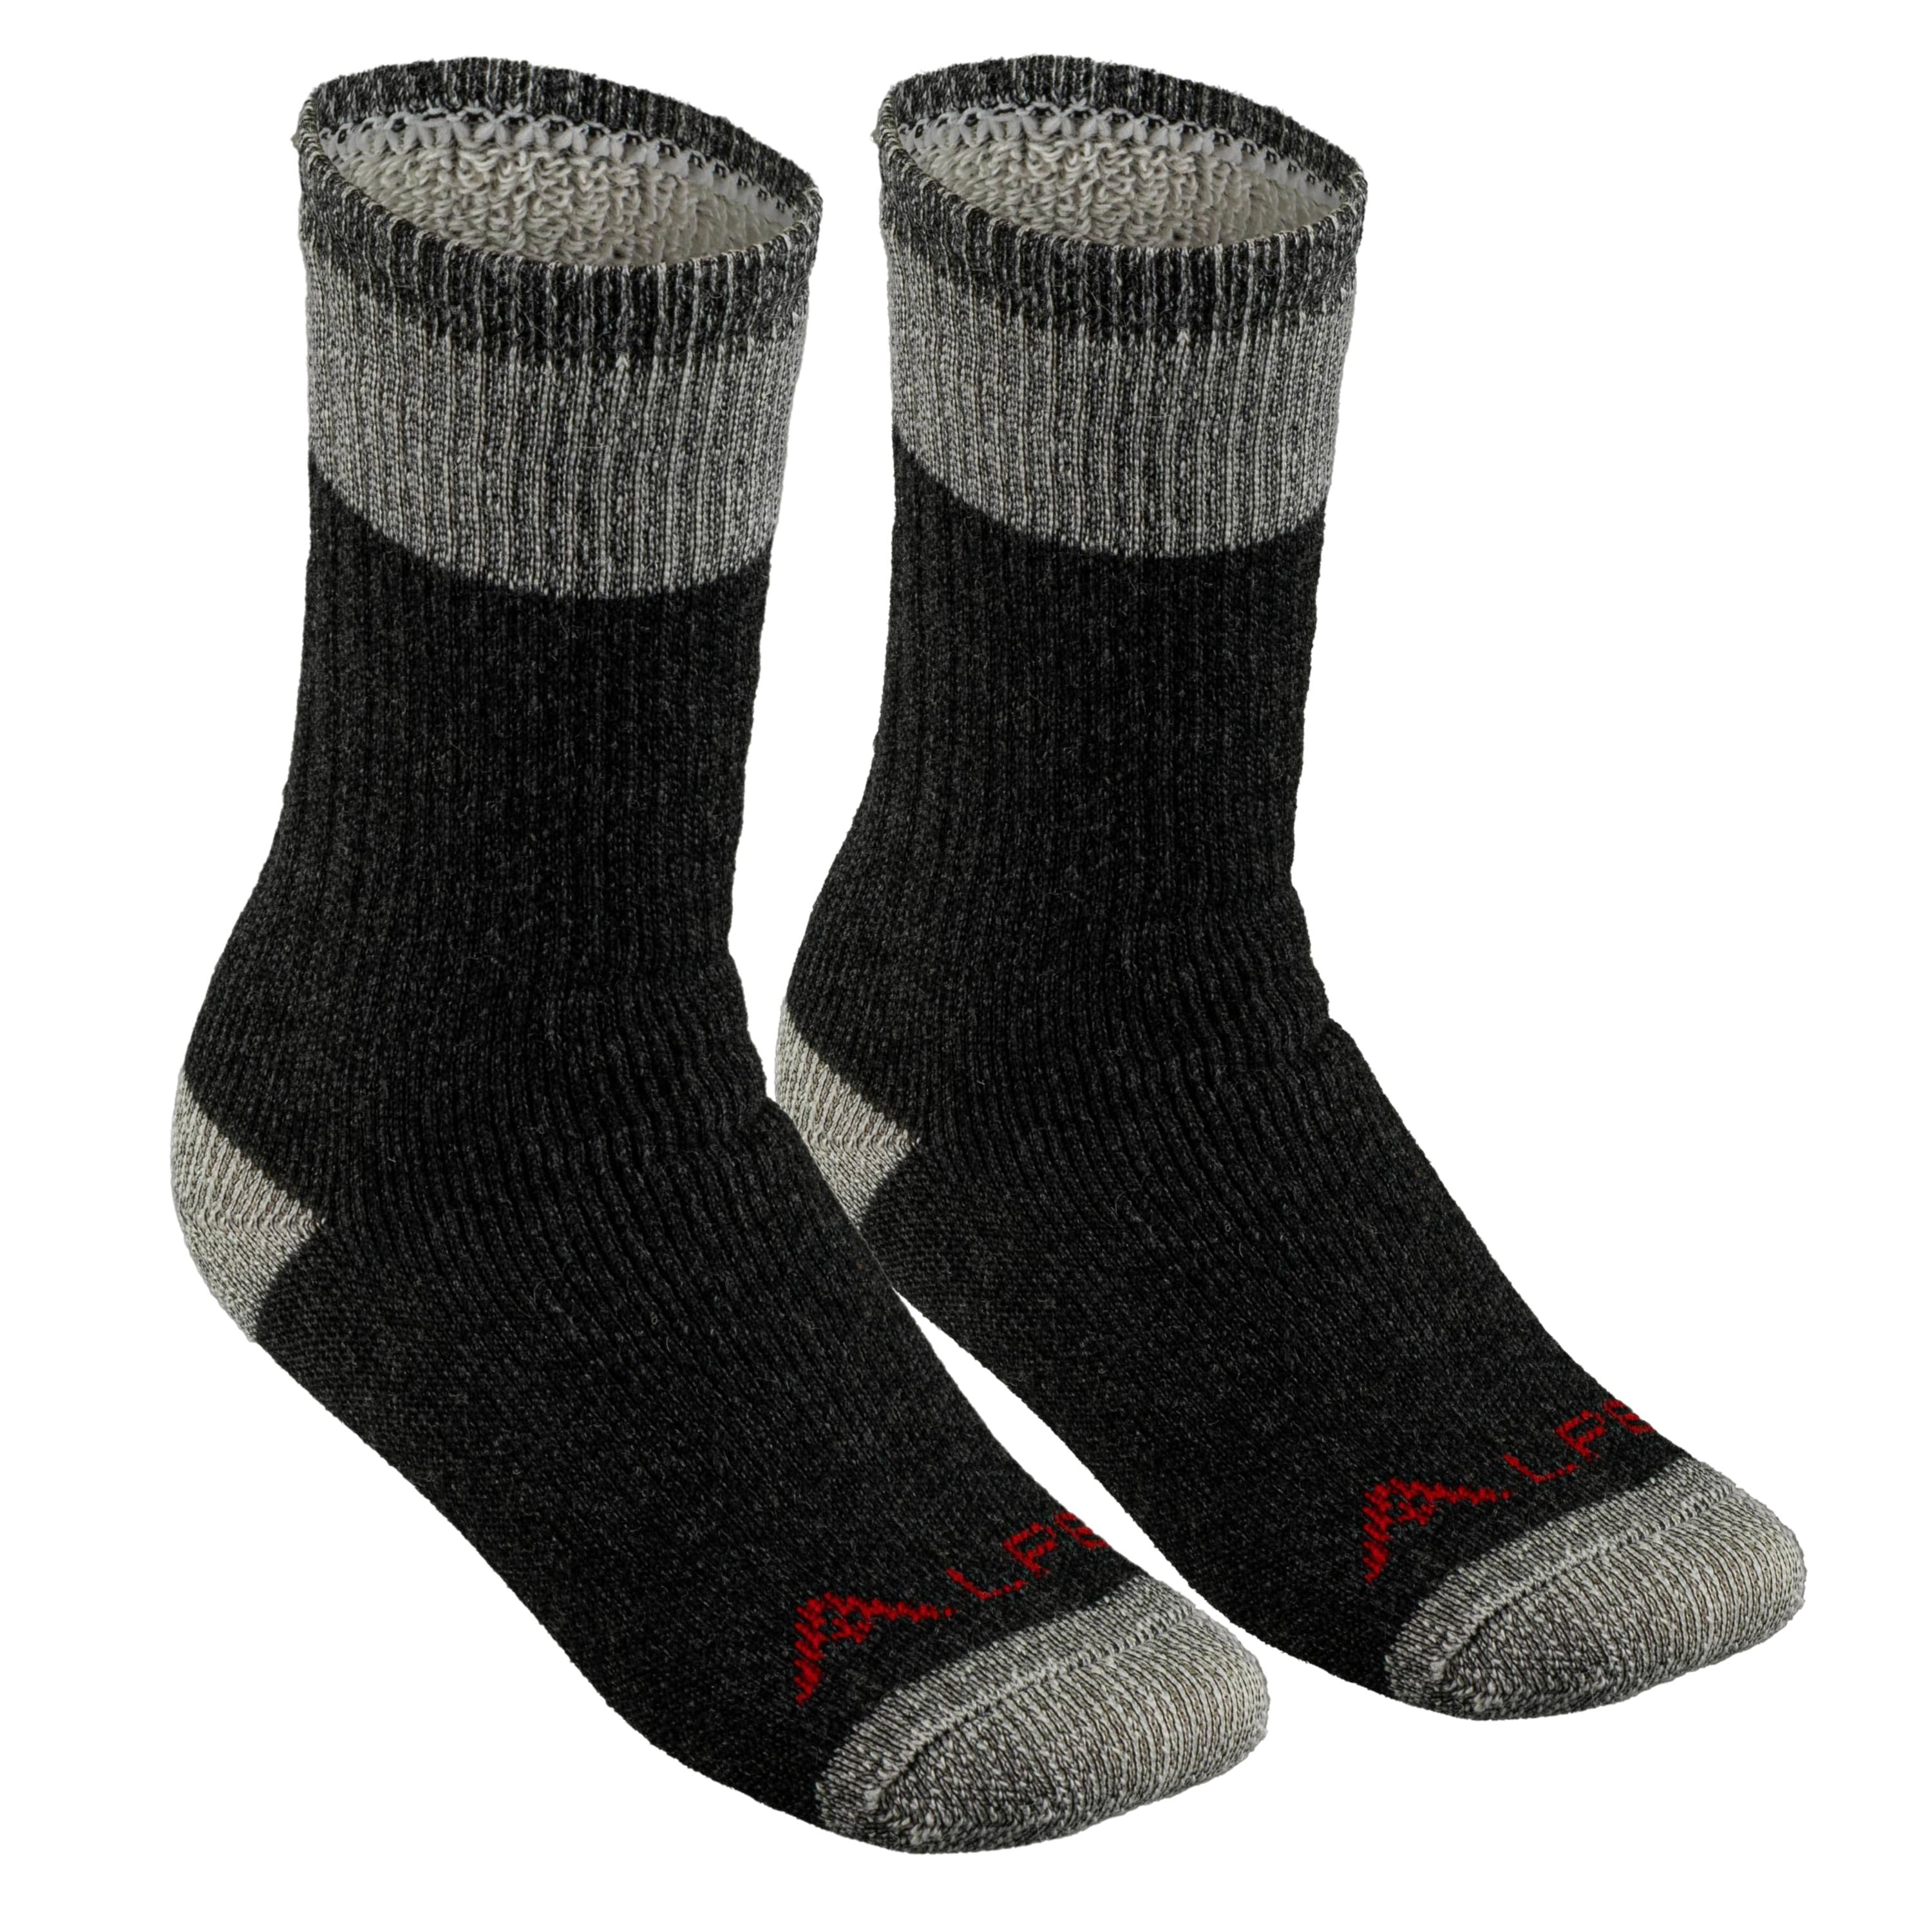 "Chic-chocs" Socks - Men's